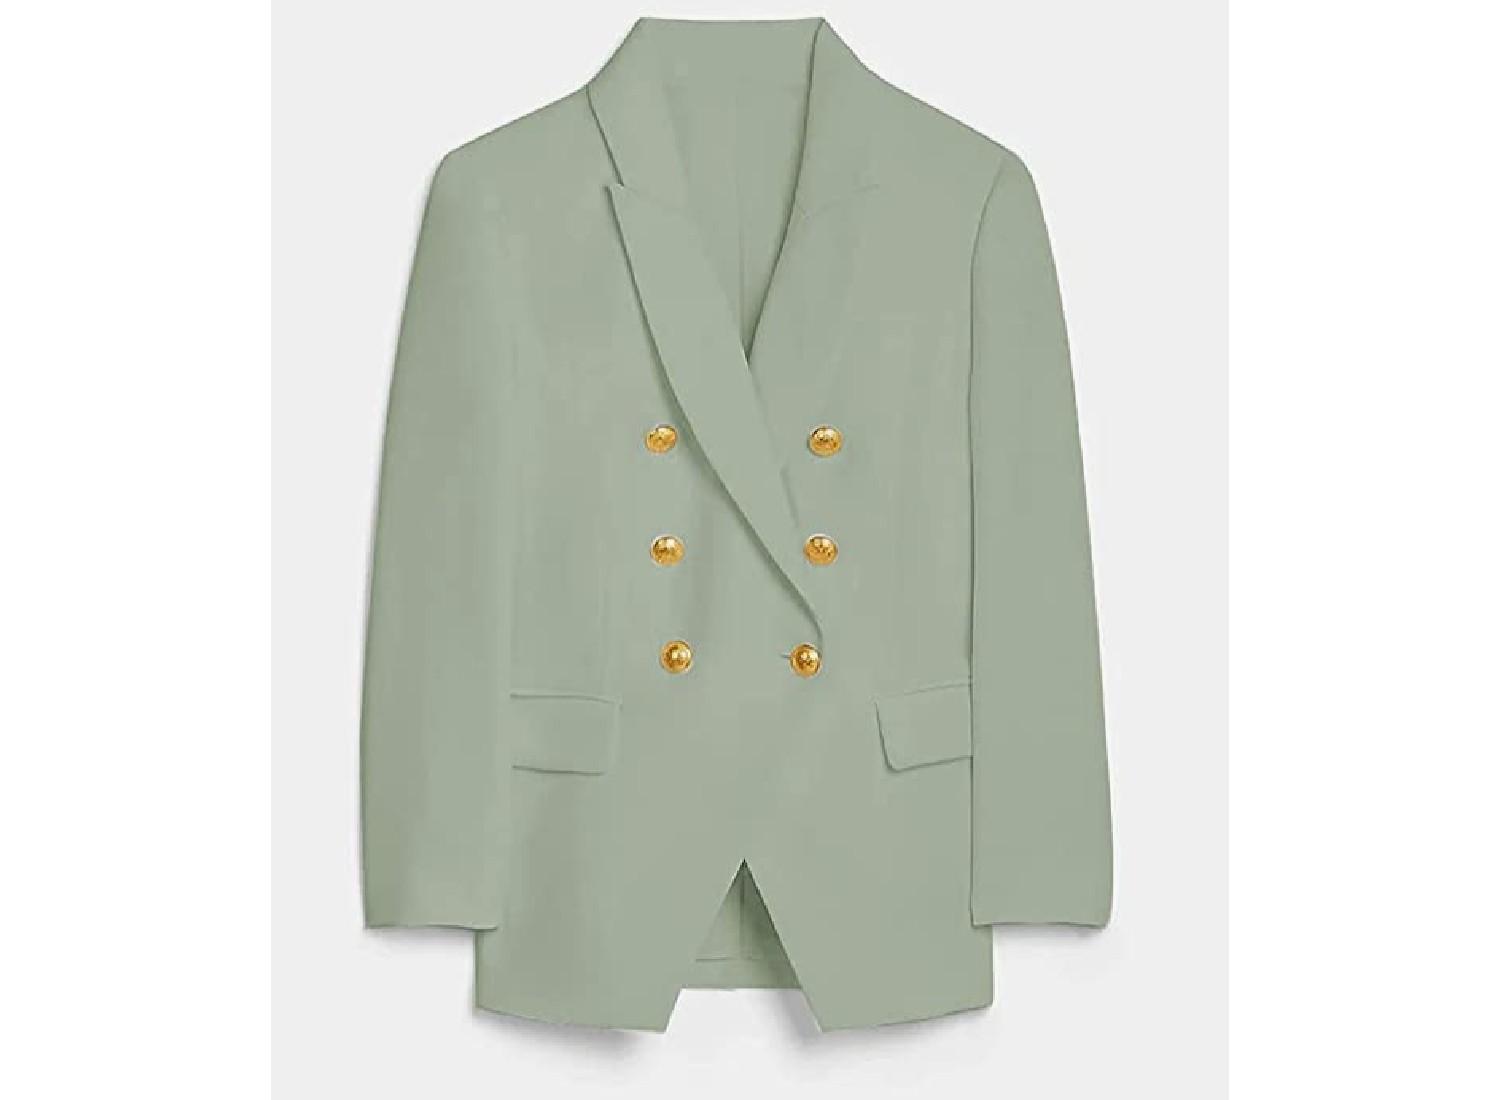 A green blazer.